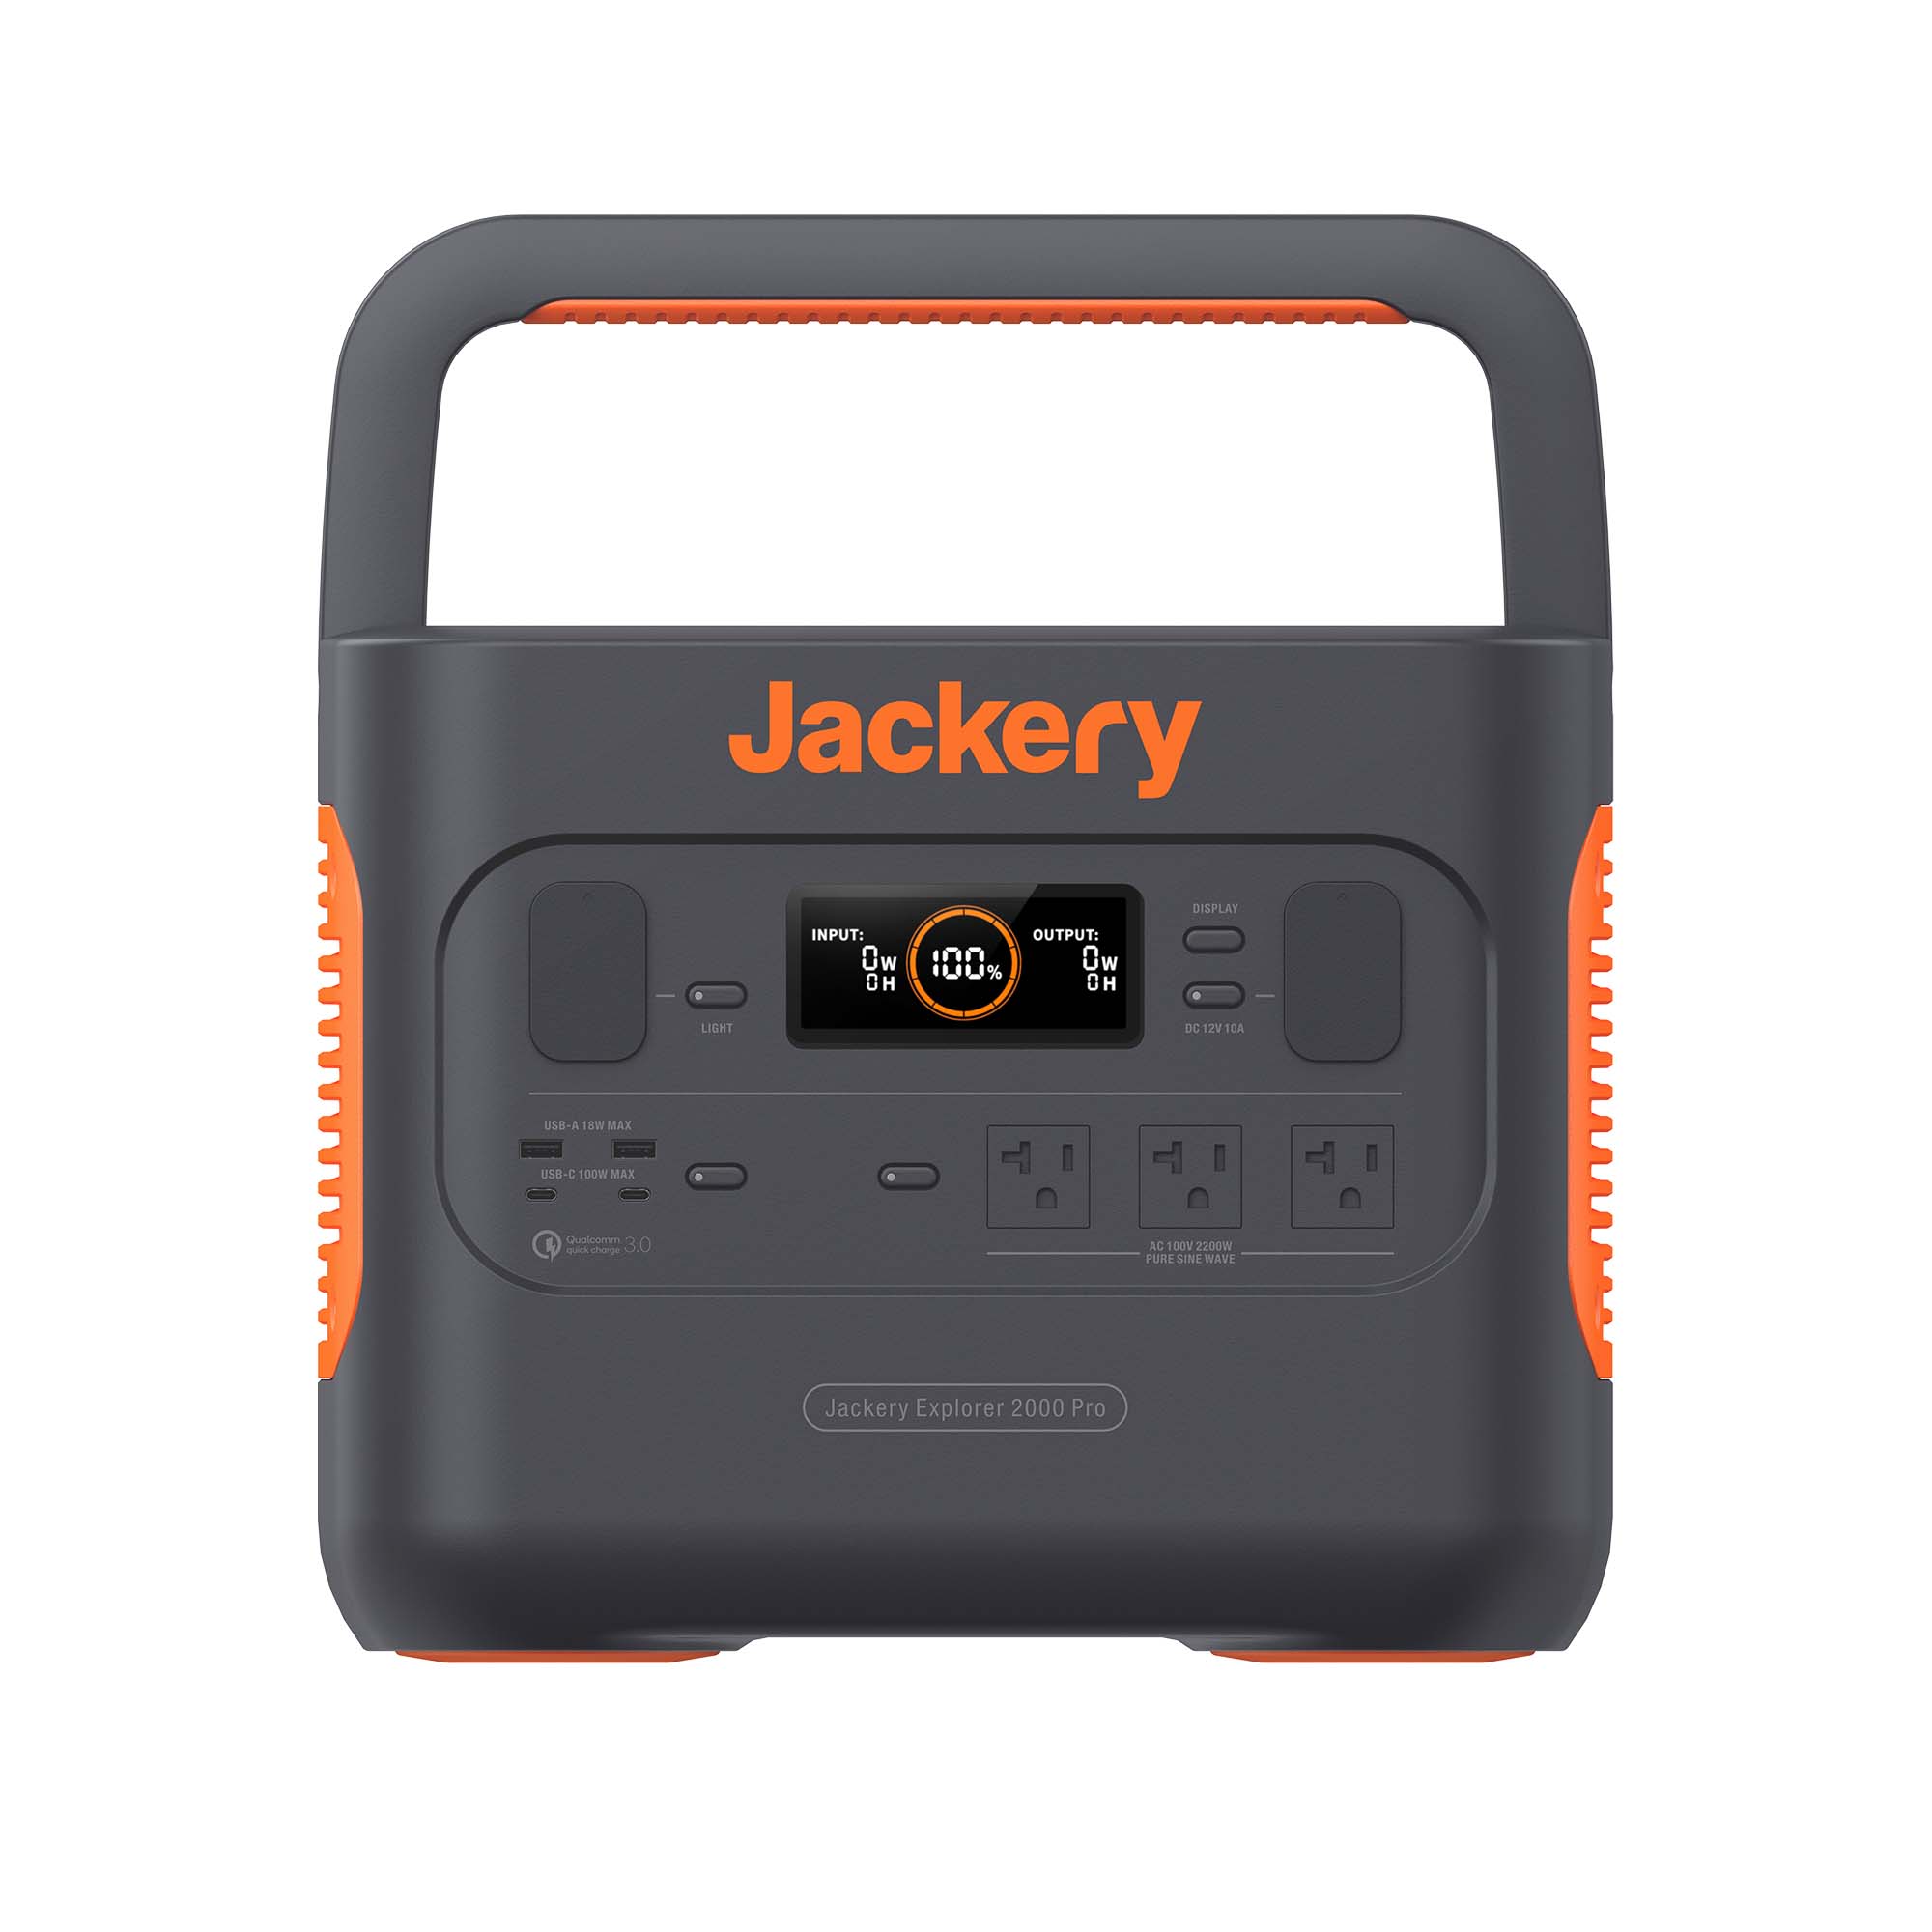 Jackery Explorer 2000 Pro Portable Power Station Review